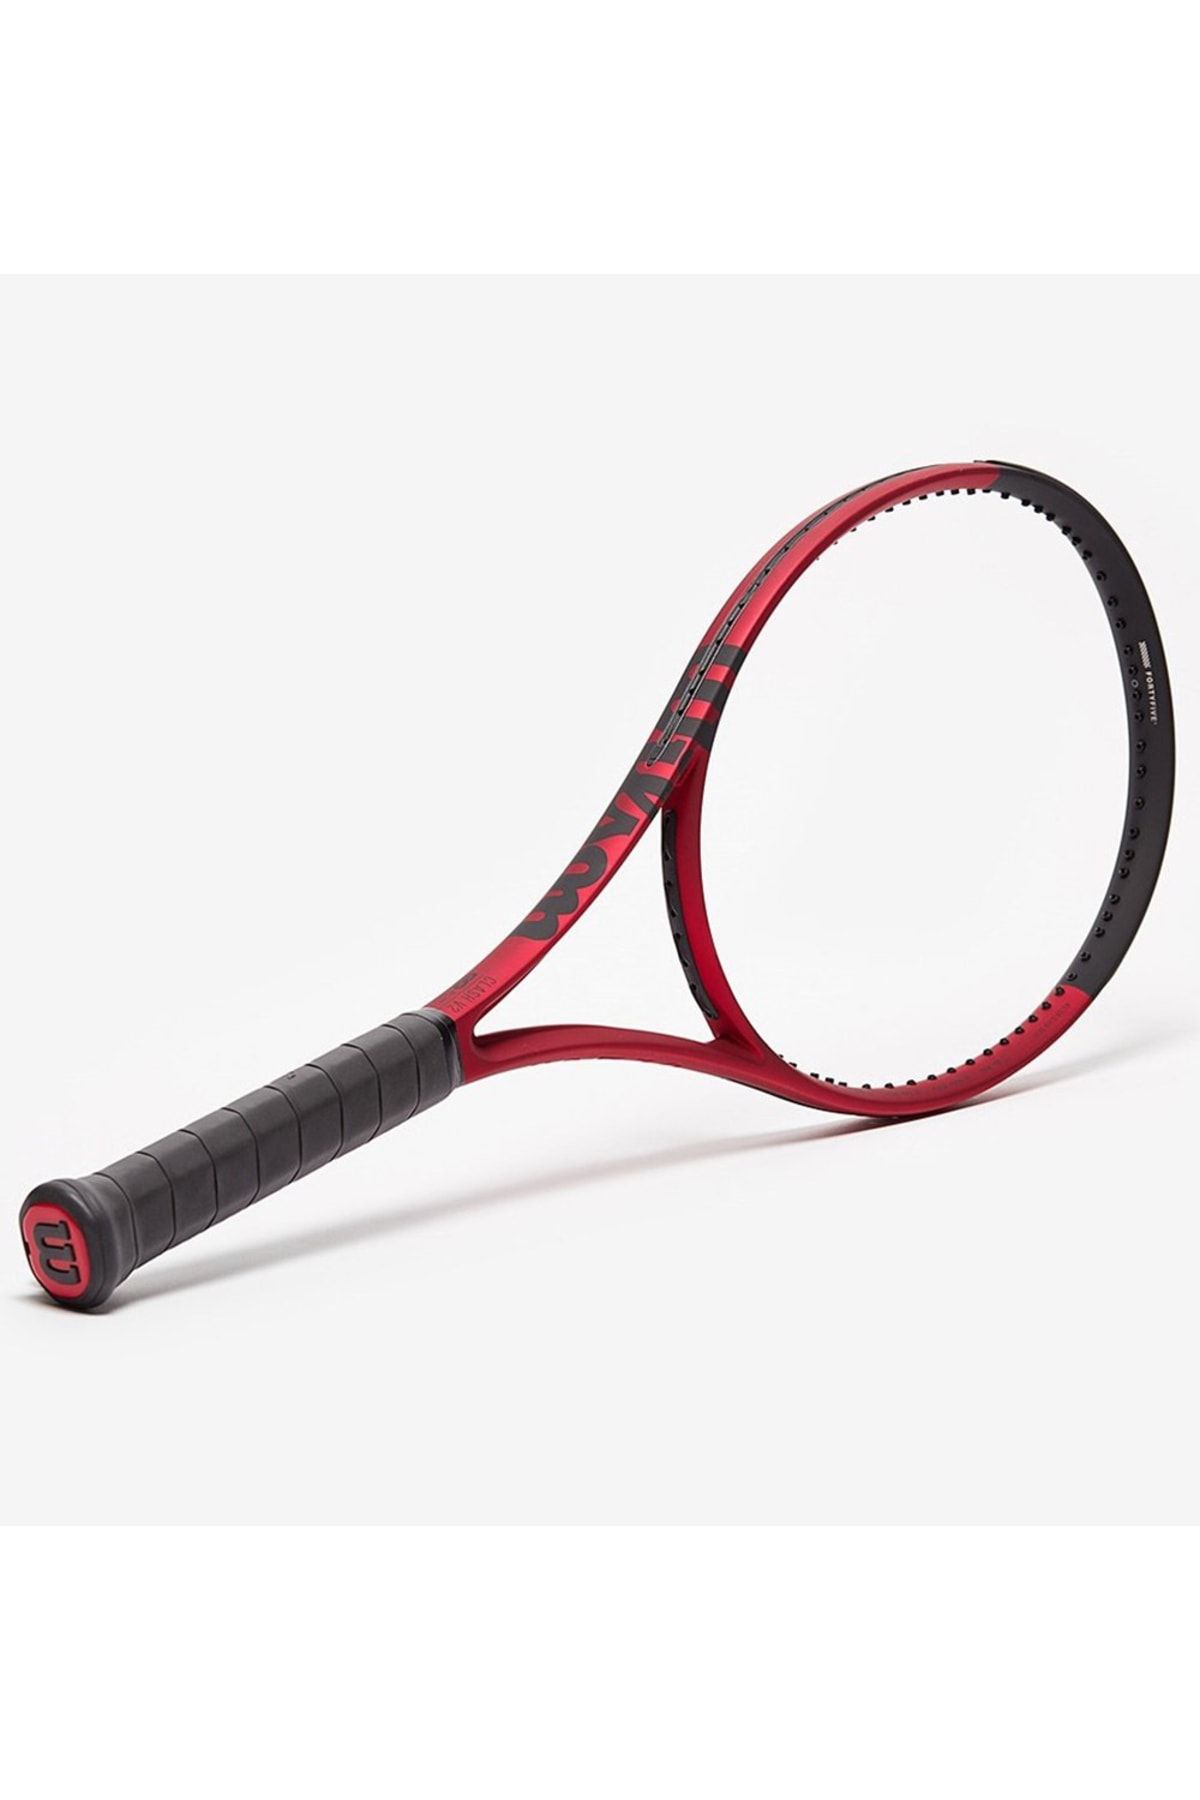 Wilson Clash 98 V2.0 Professional Tenis Raketi Wr074211